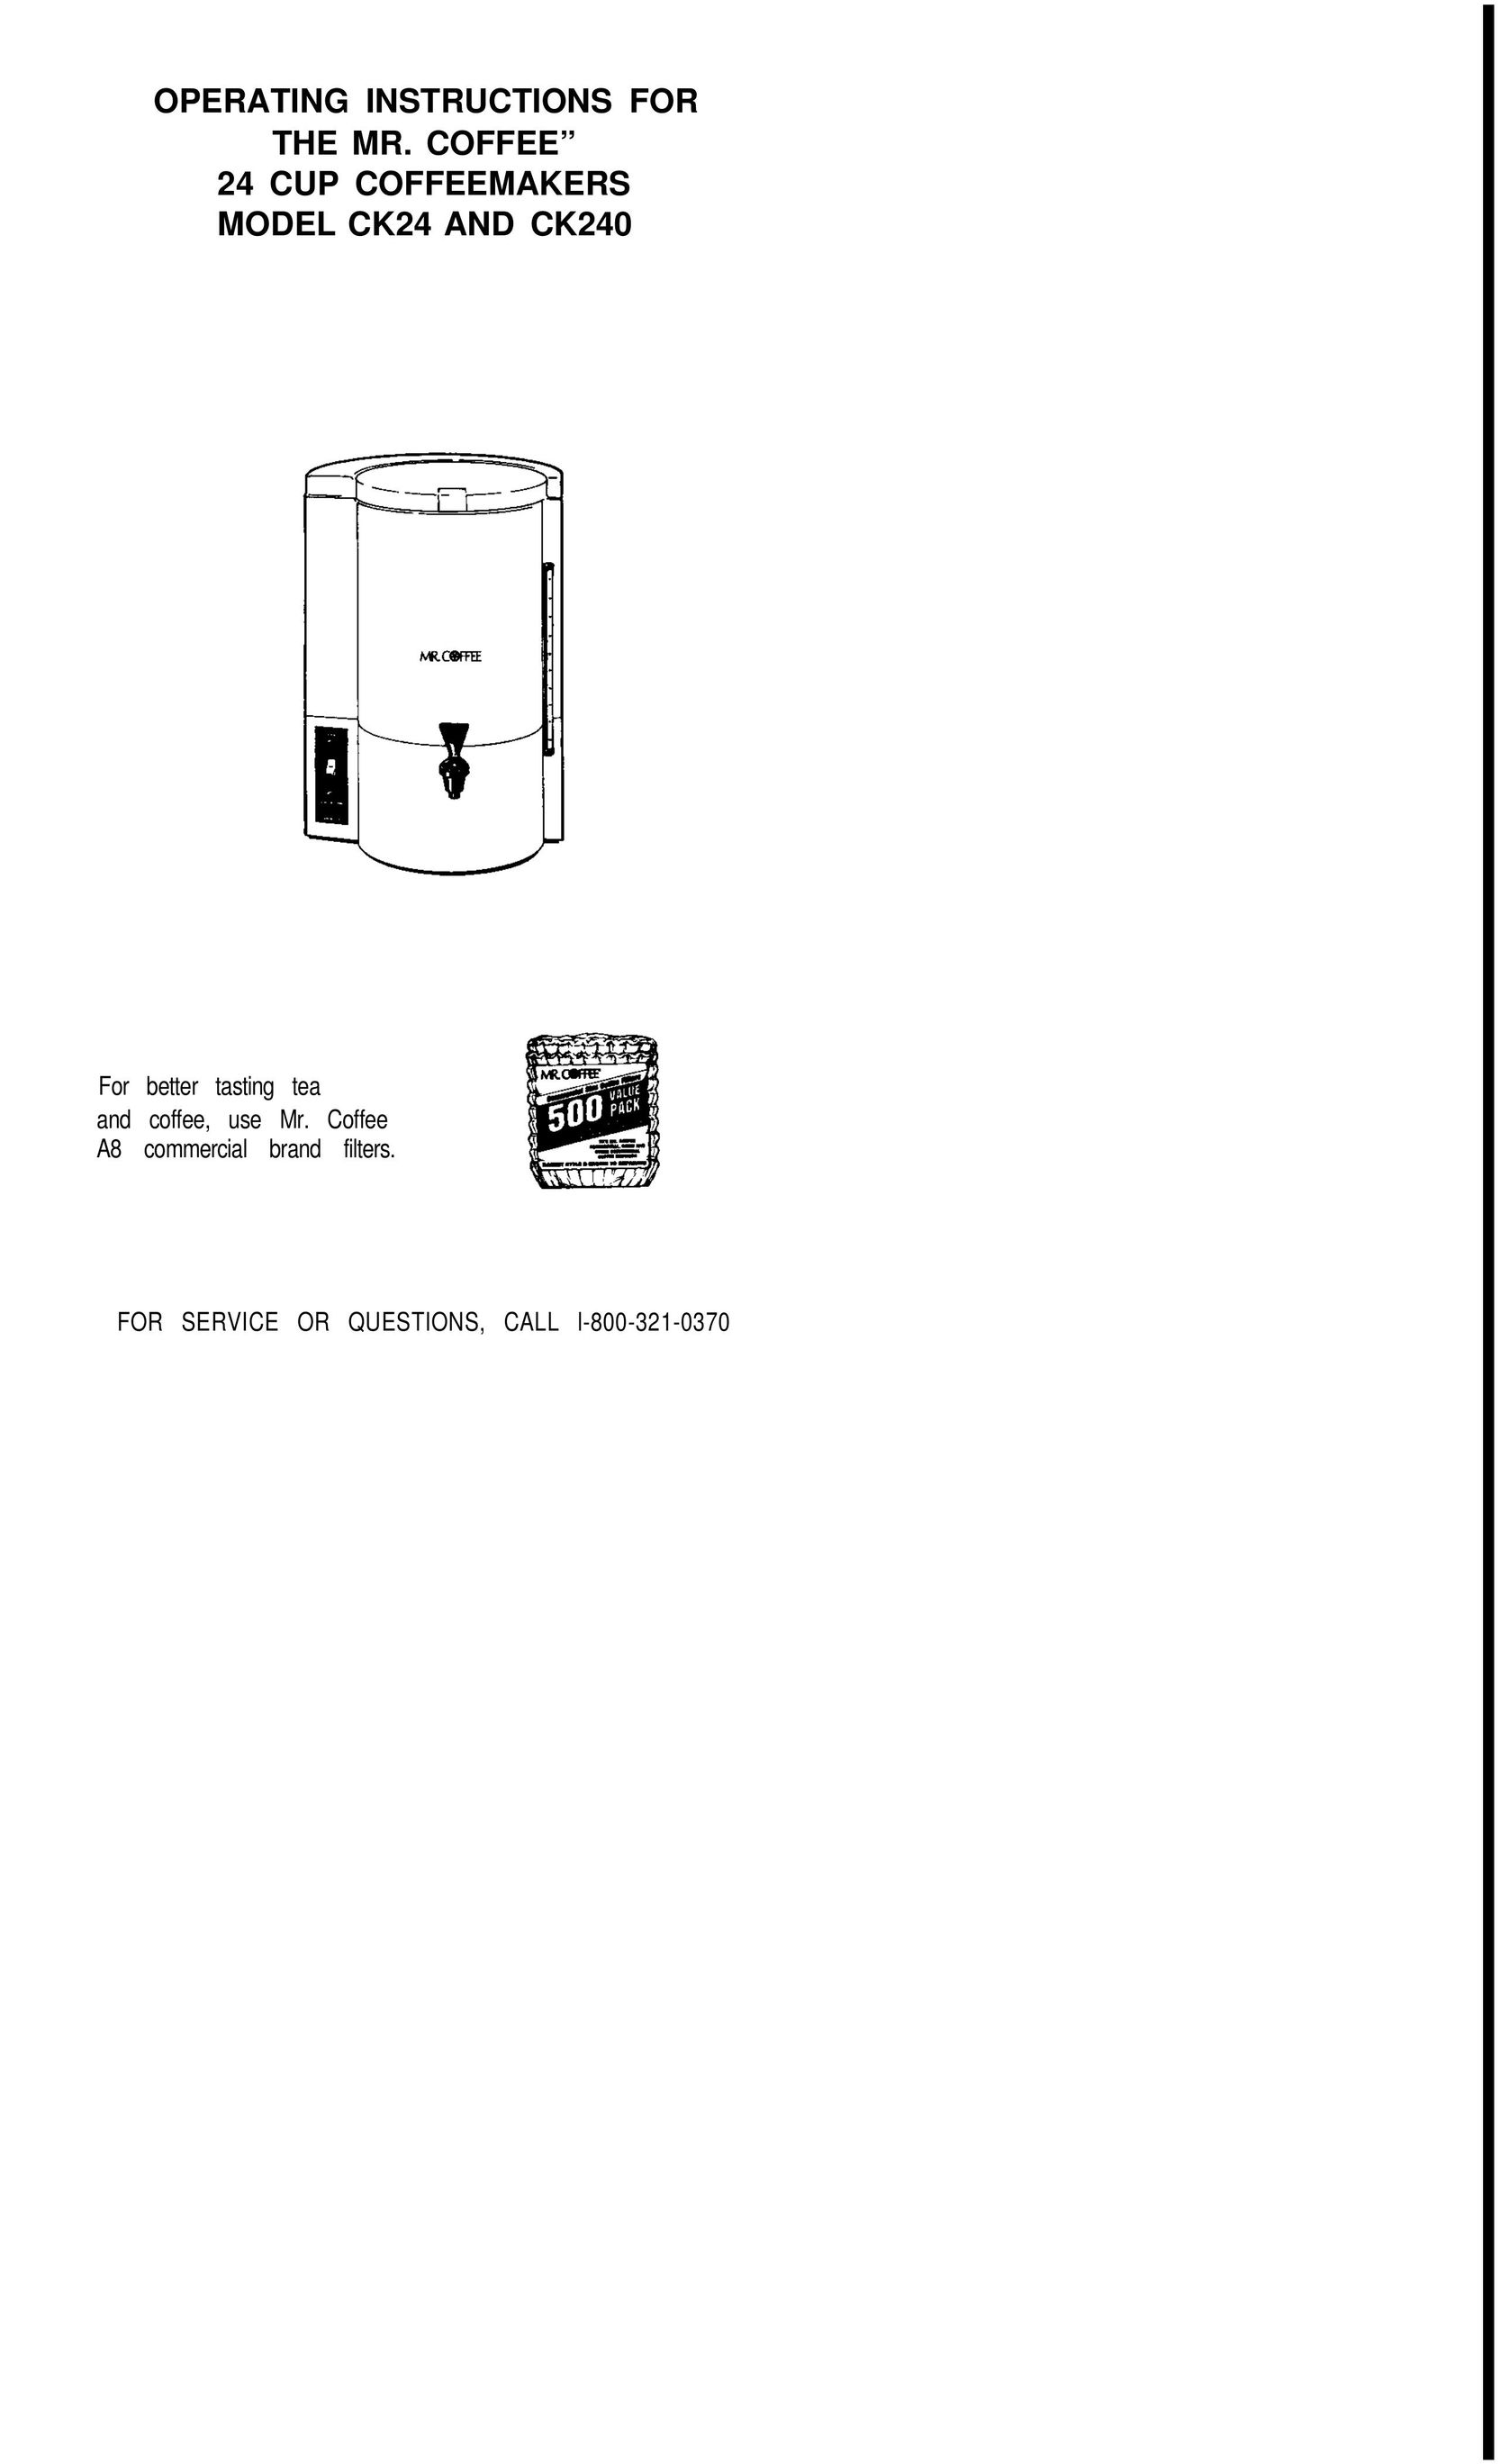 Mr. Coffee CK240 Coffeemaker User Manual